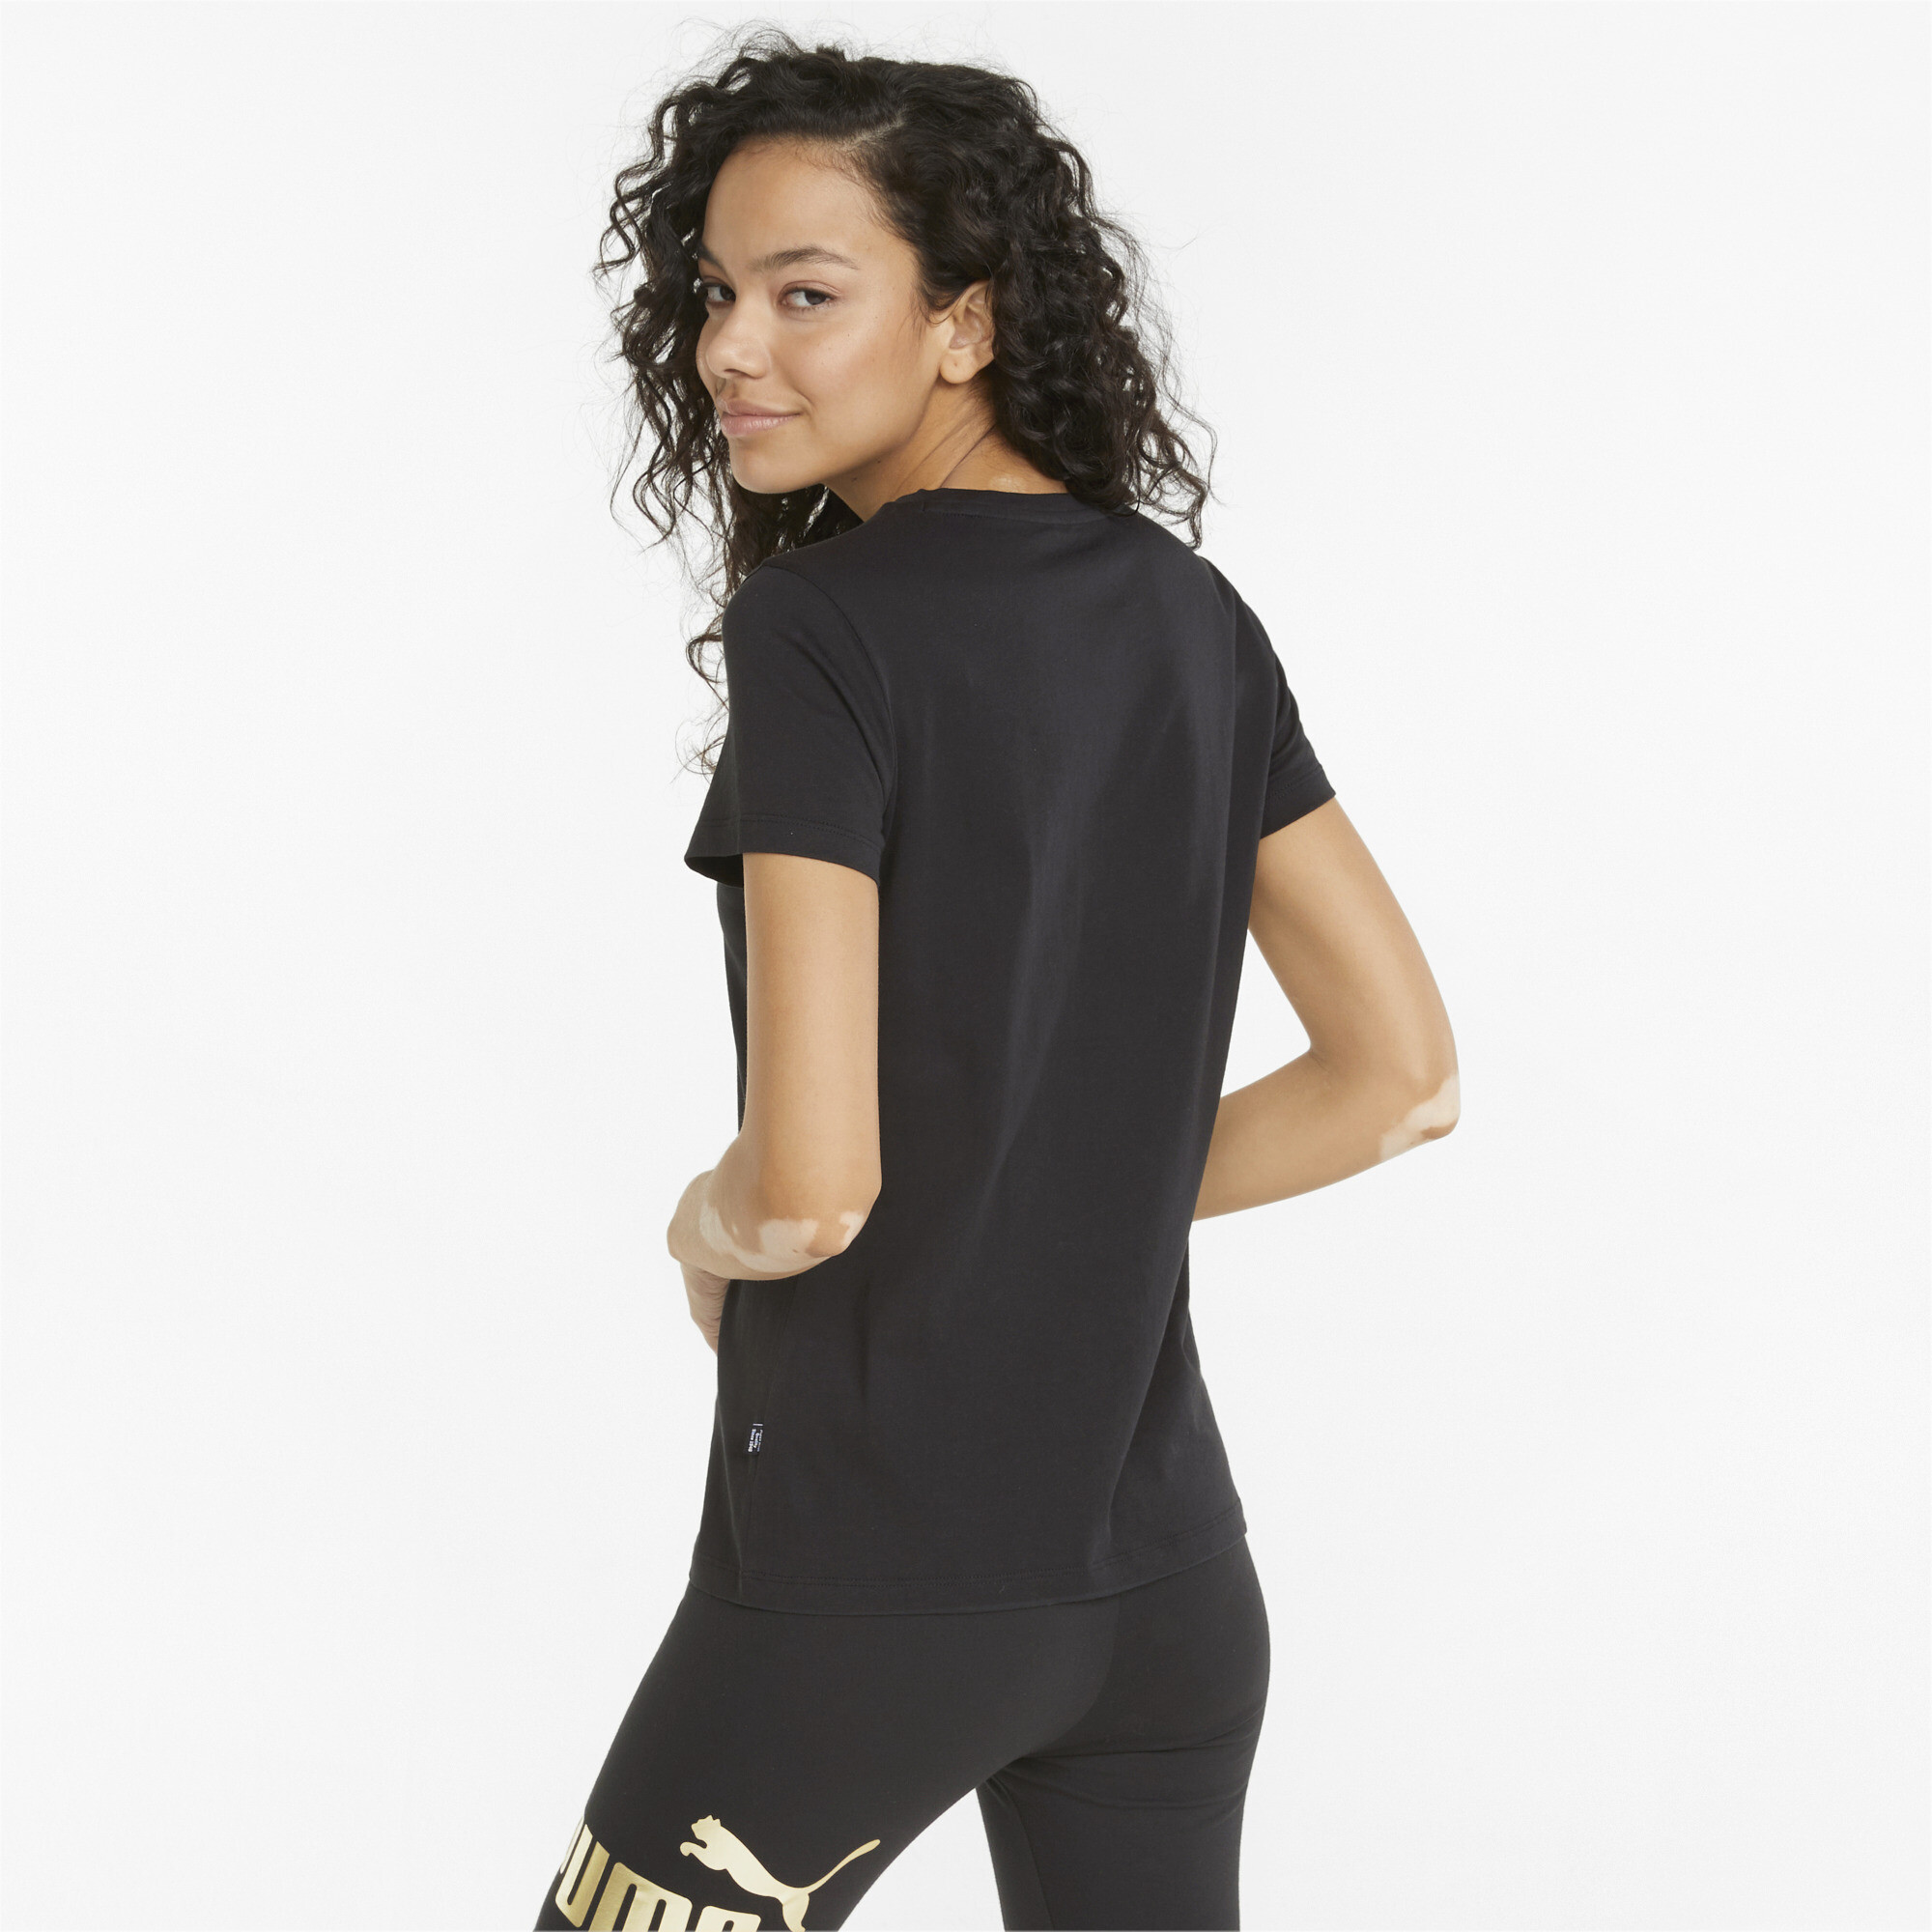 Women's PUMA Essentials+ Metallic Logo T-Shirt In Black/Gold, Size XS